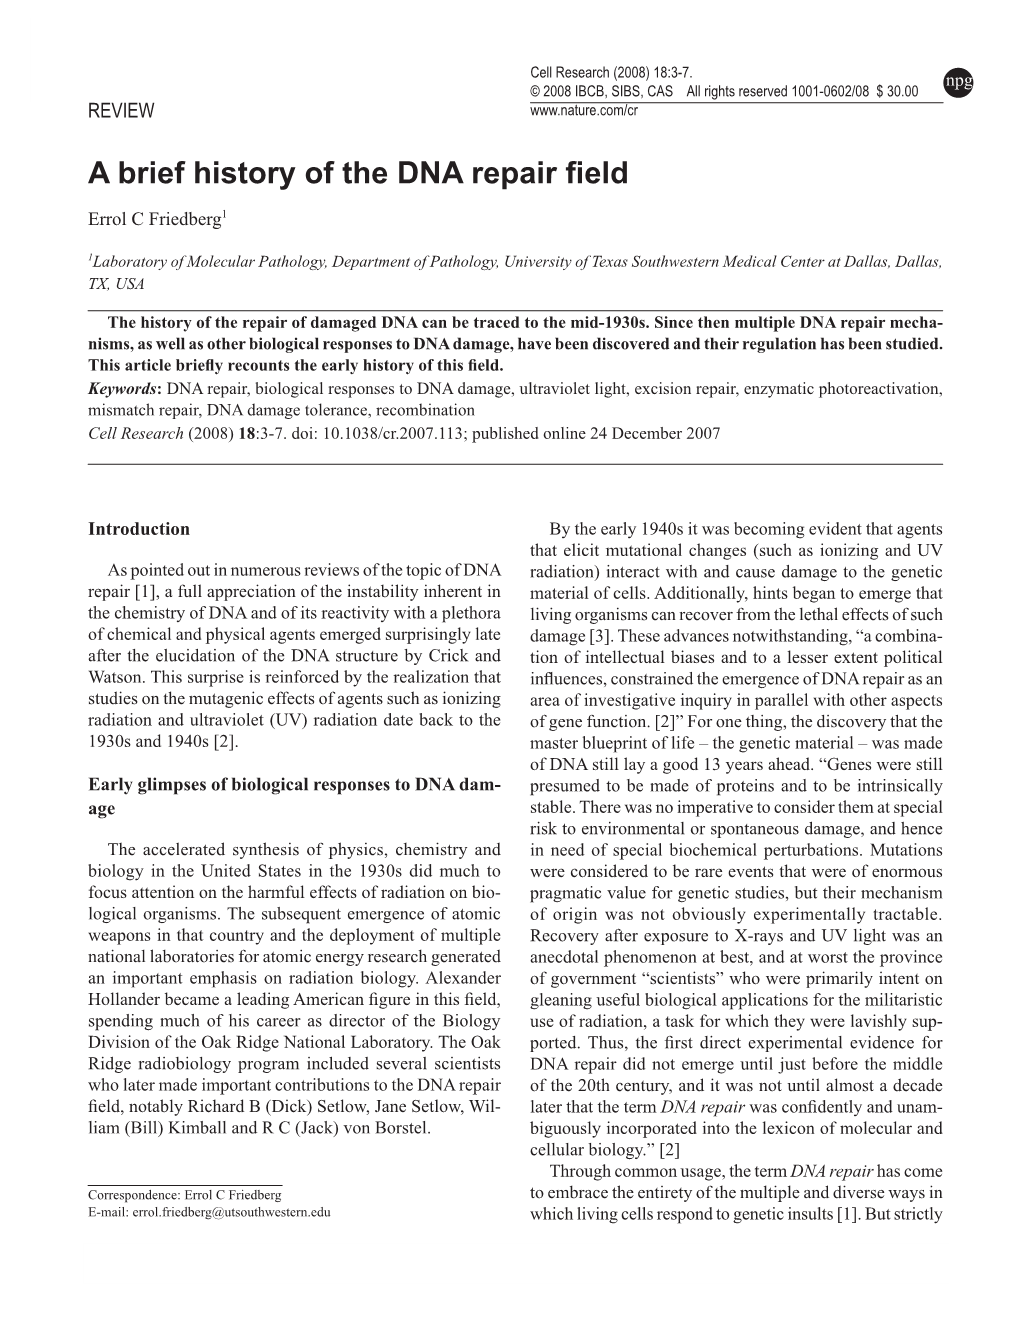 A Brief History of the DNA Repair Field Errol C Friedberg1